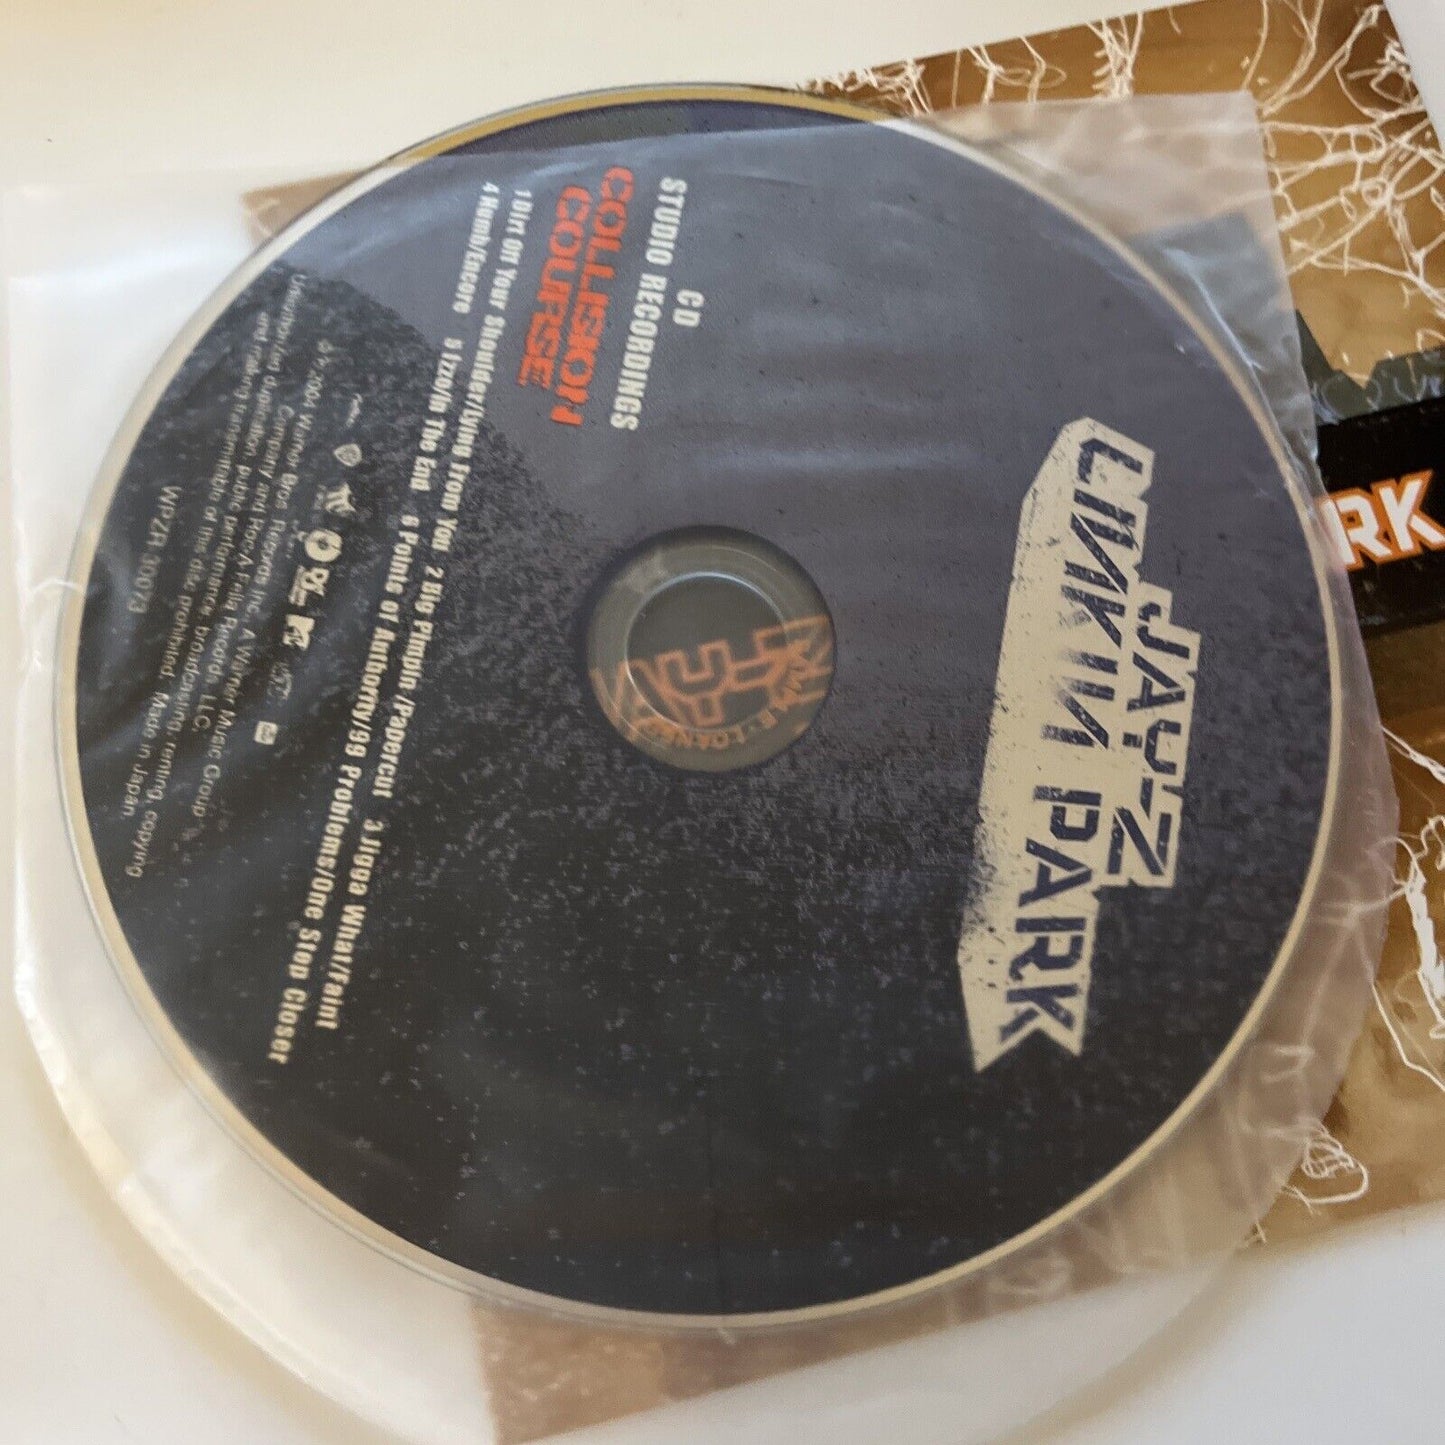 Jay-Z Linkin Park Collision Course (CD + DVD) Obi Japan Wpzr30073-4 Region 4 &2